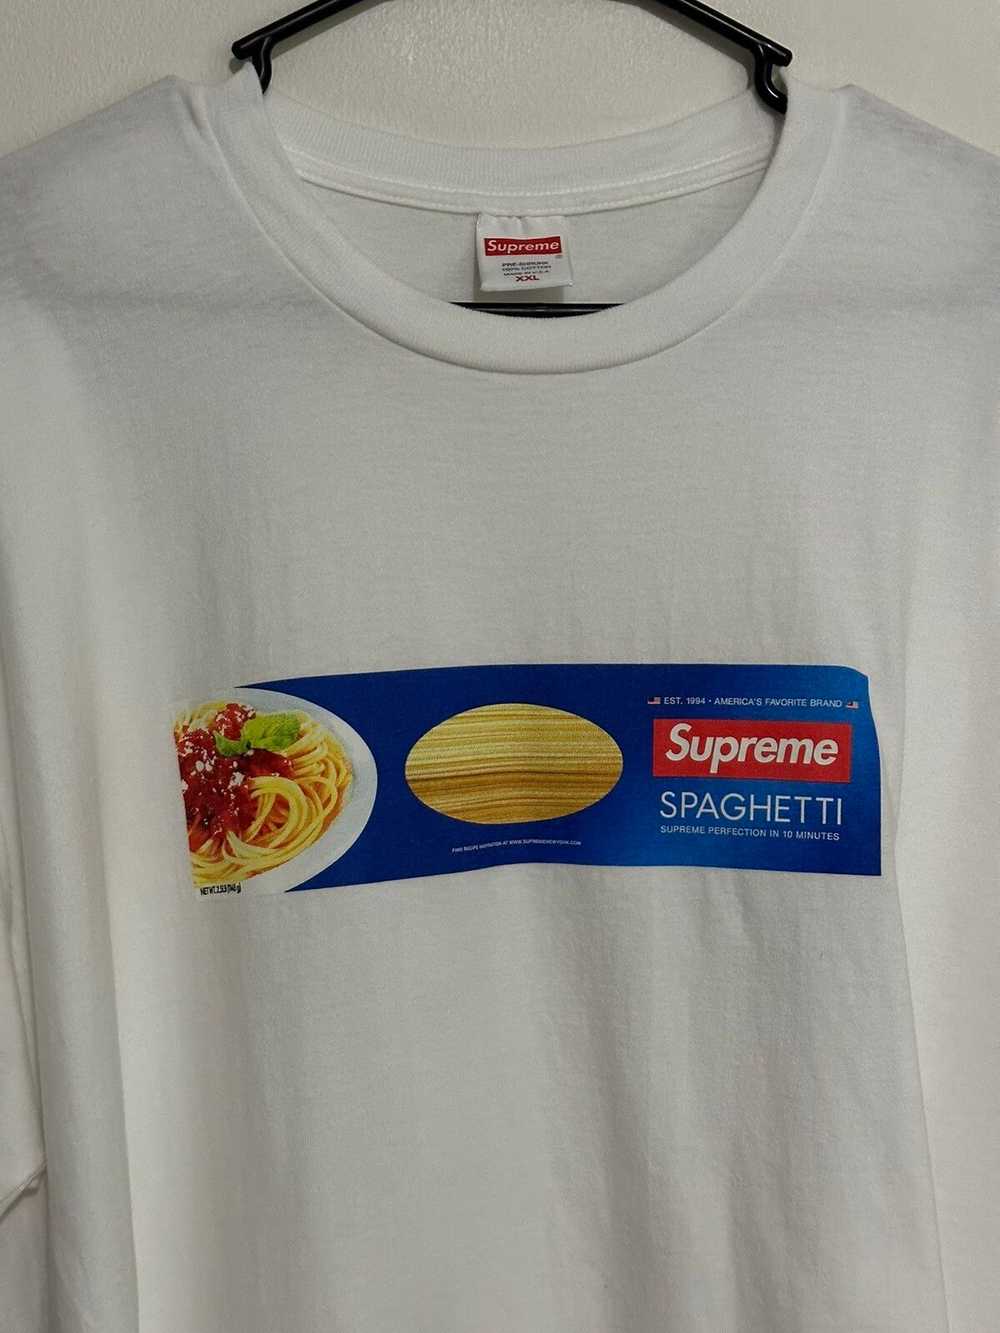 Supreme Supreme Spaghetti Tee - image 2